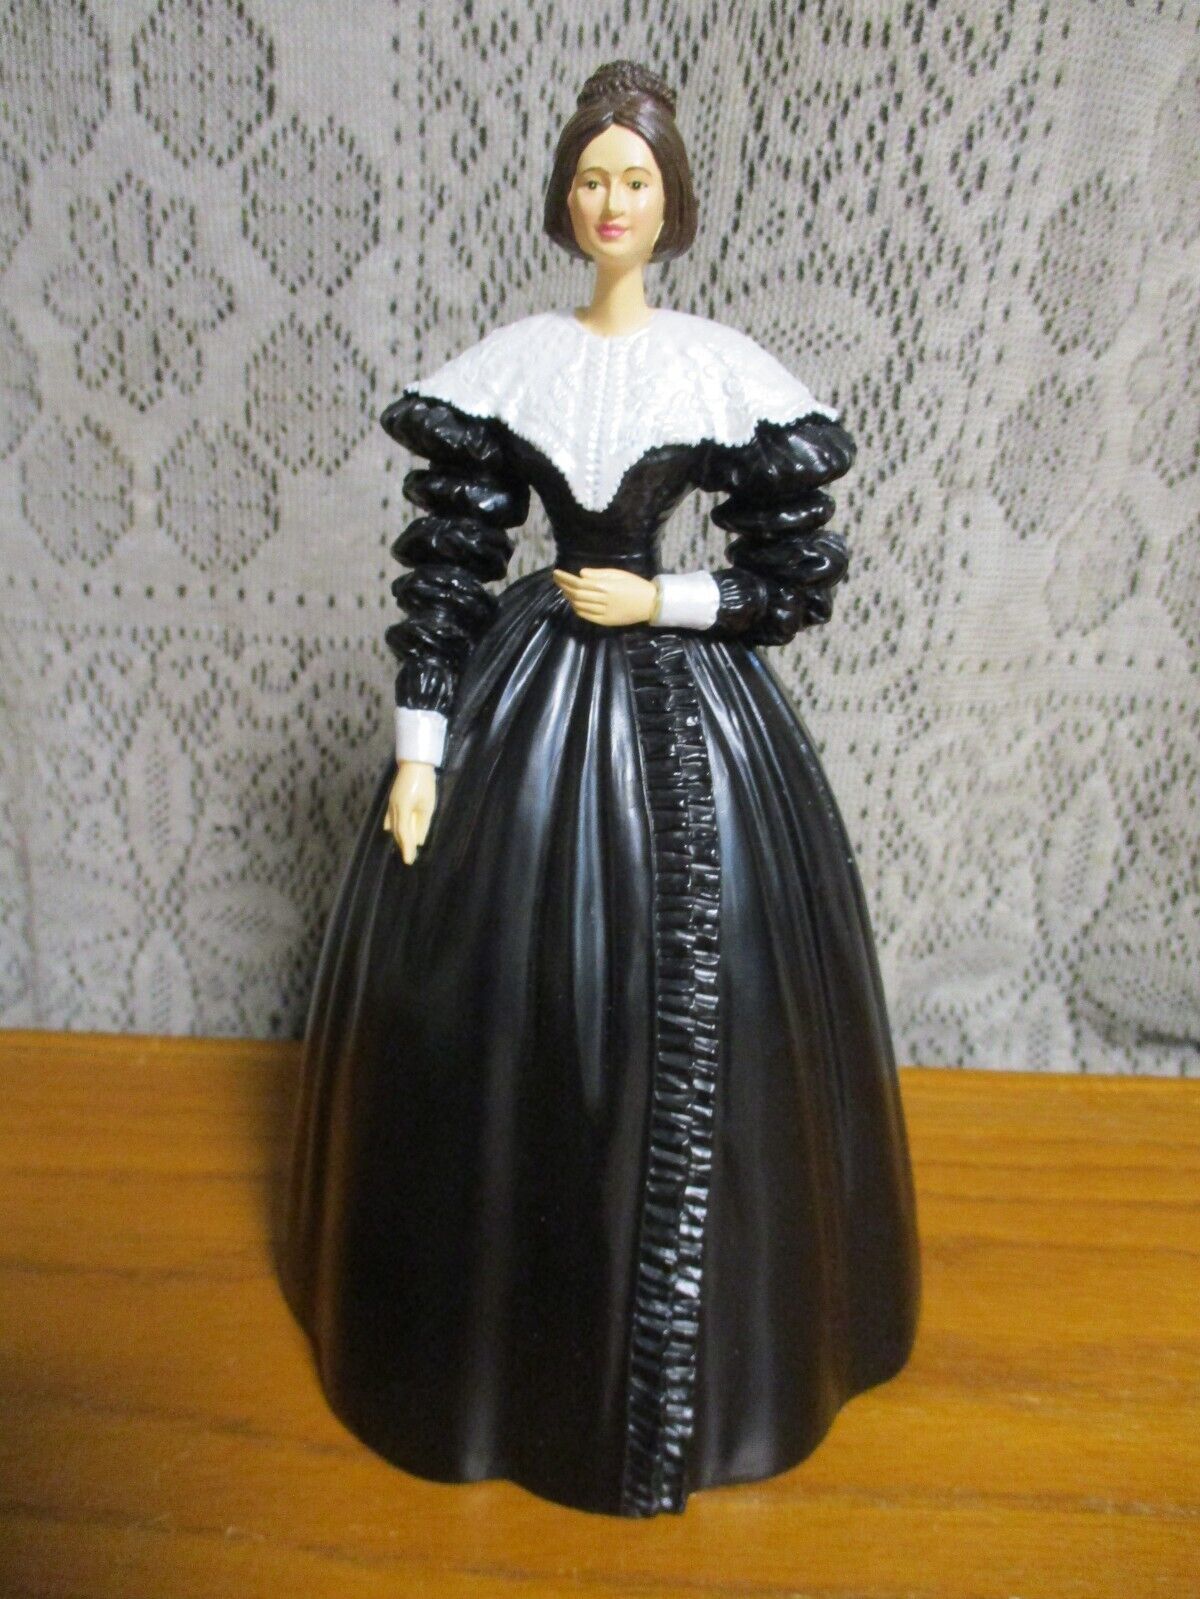 Royal Fashions Queen Victoria Figurine Her 1st Privy Council Hamilton Coll. 2014